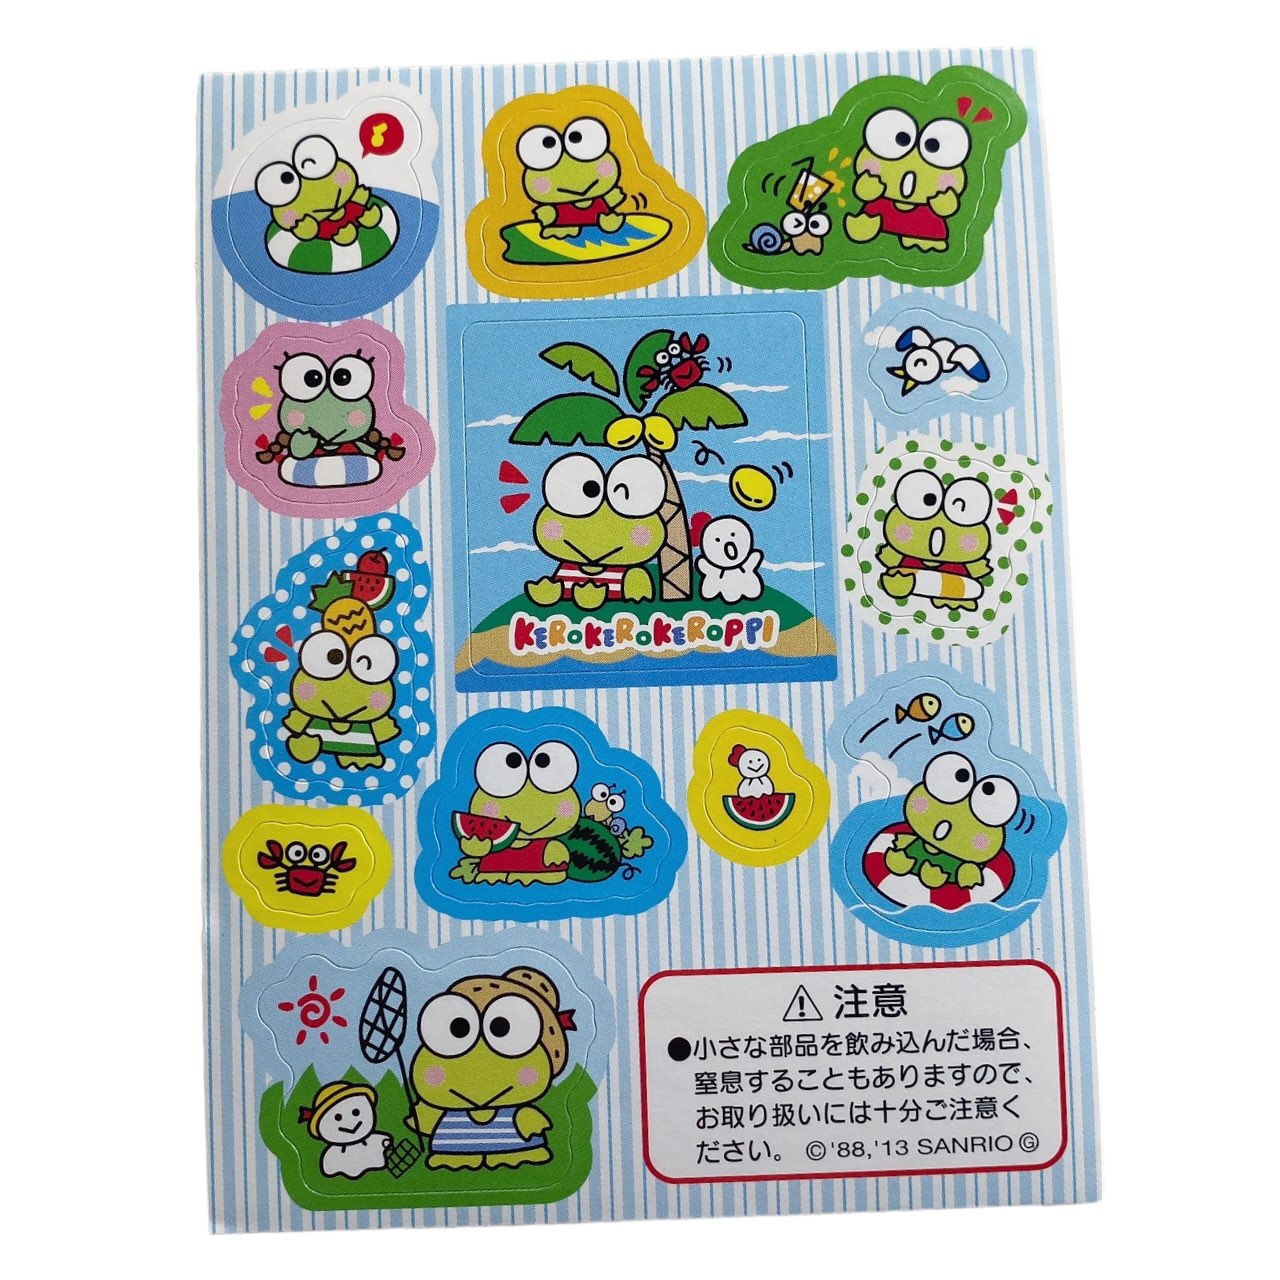 2013 Sanrio Keroppi Sticker Sheet